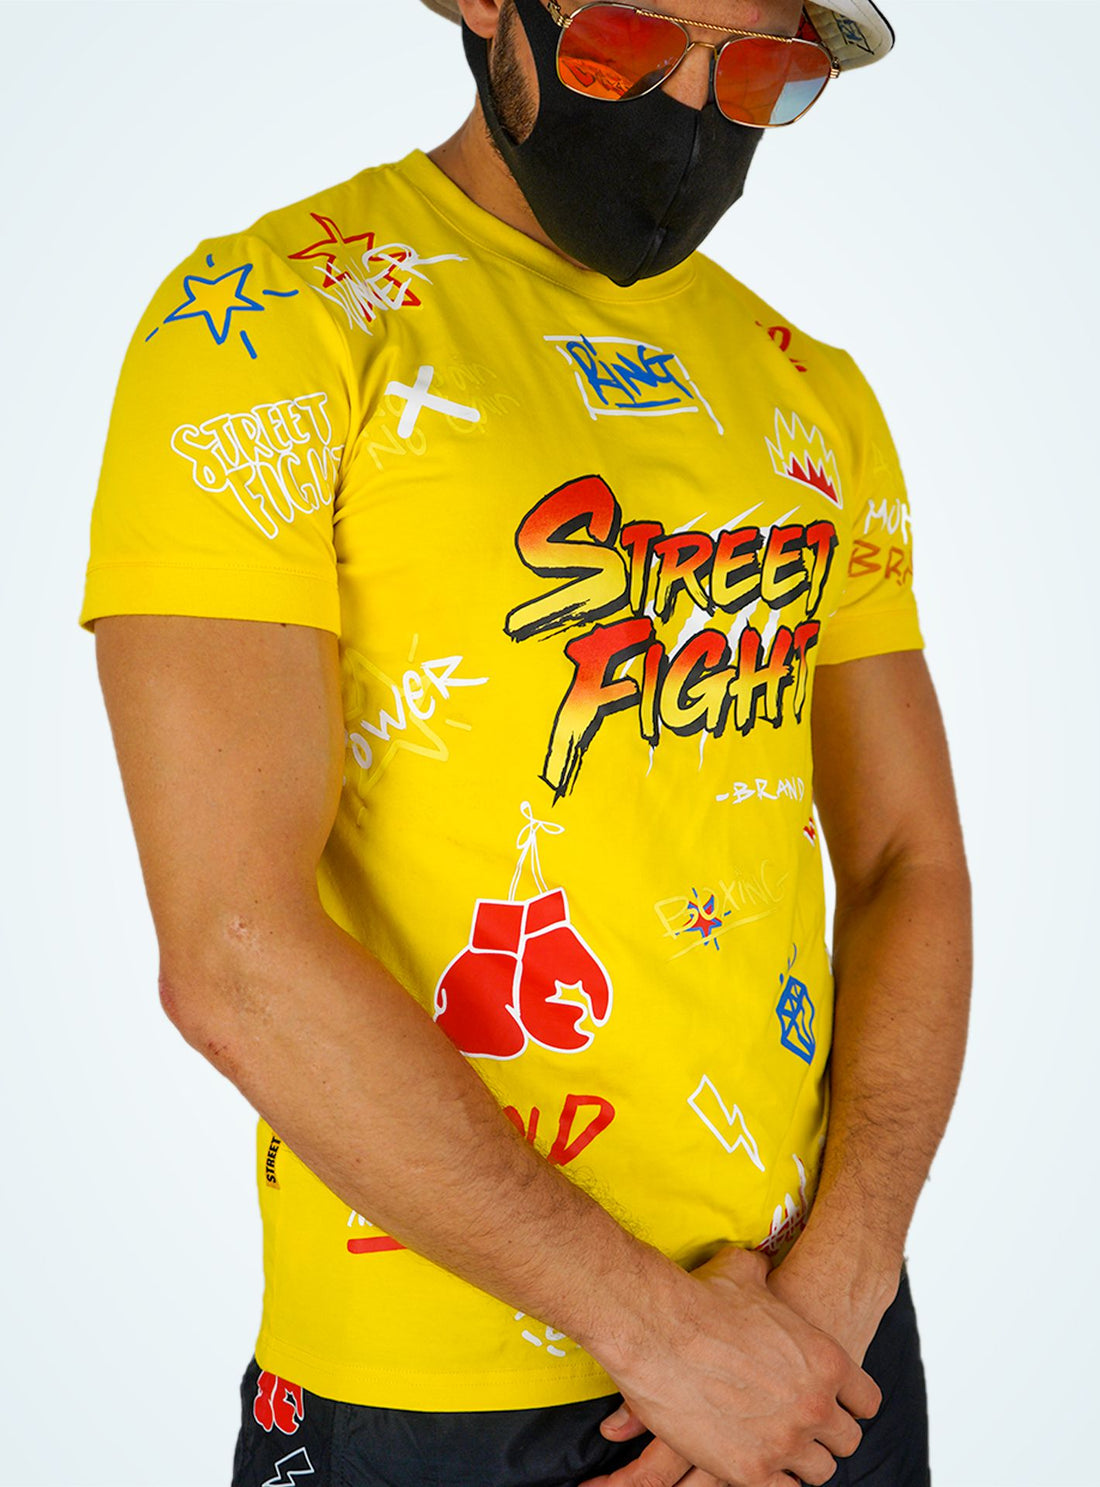 « T-shirt Street fight »